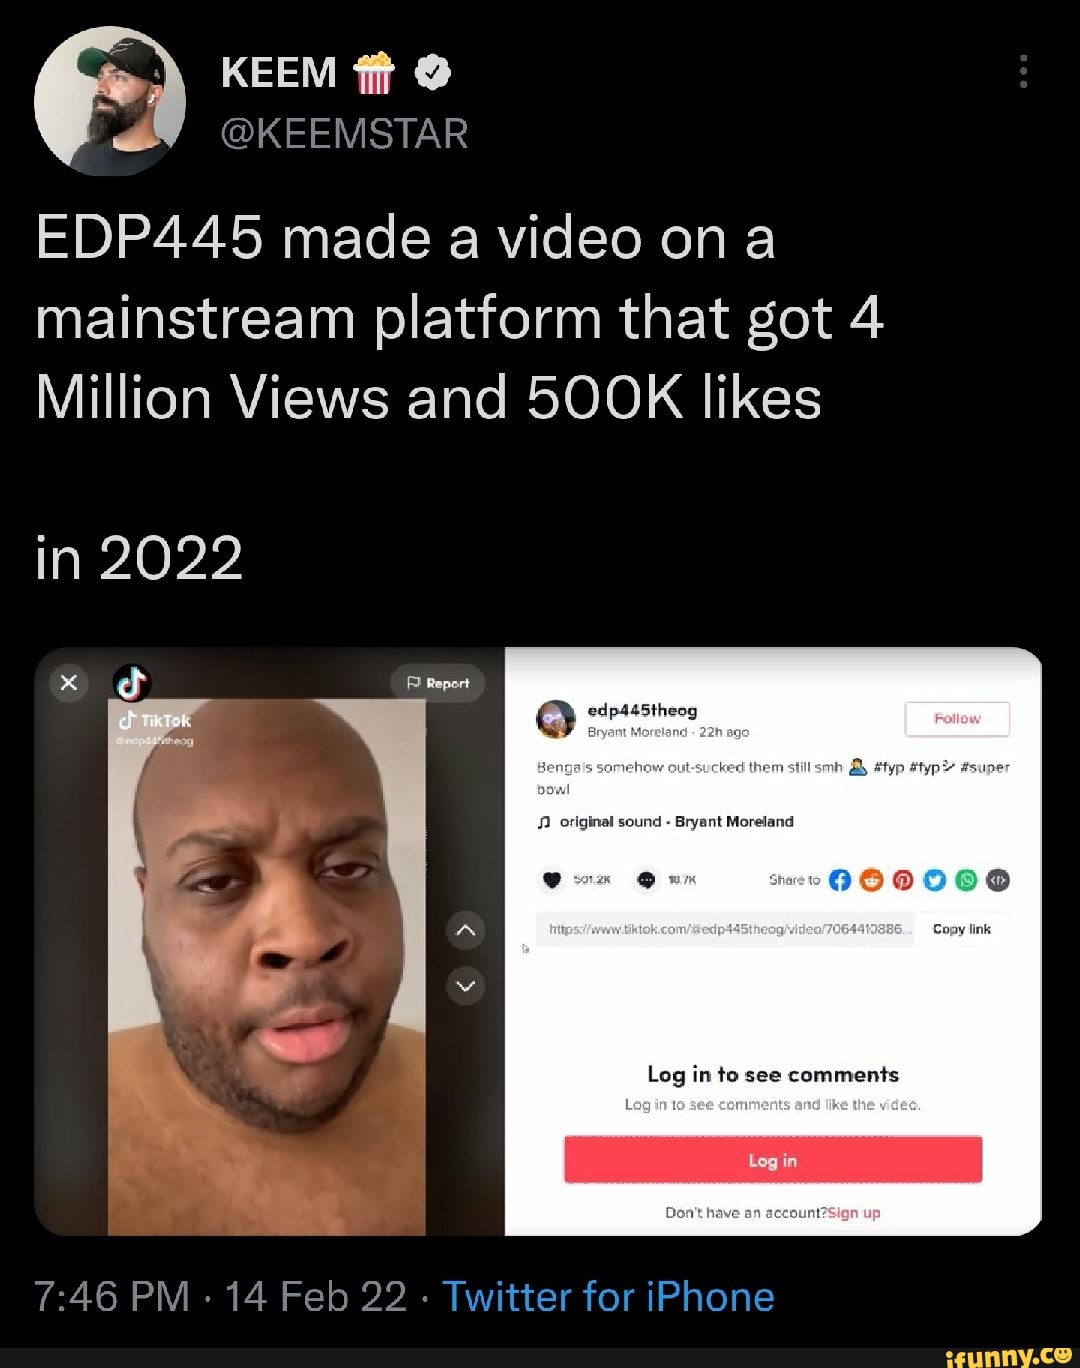 KEEM EDP445 made a video on mainstream platform that got 4 Million